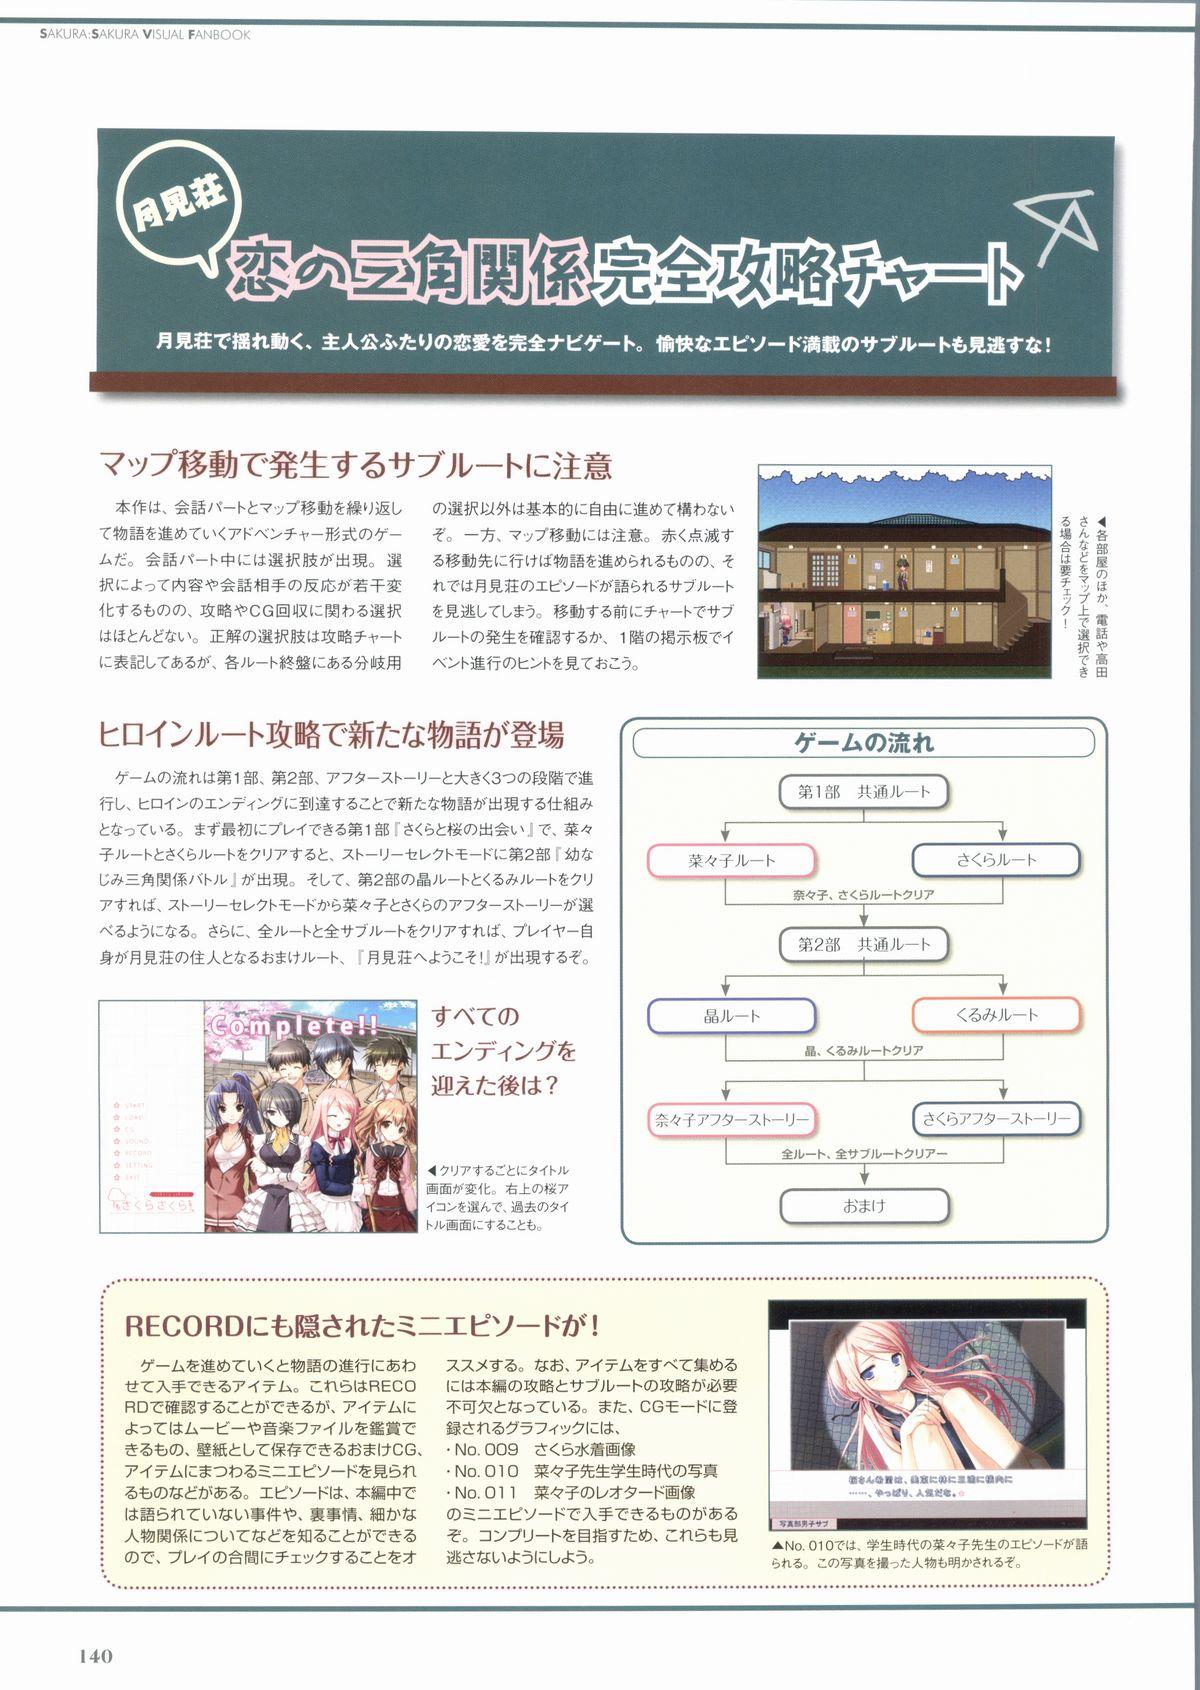 Sakura Sakura Visual Fan Book 144